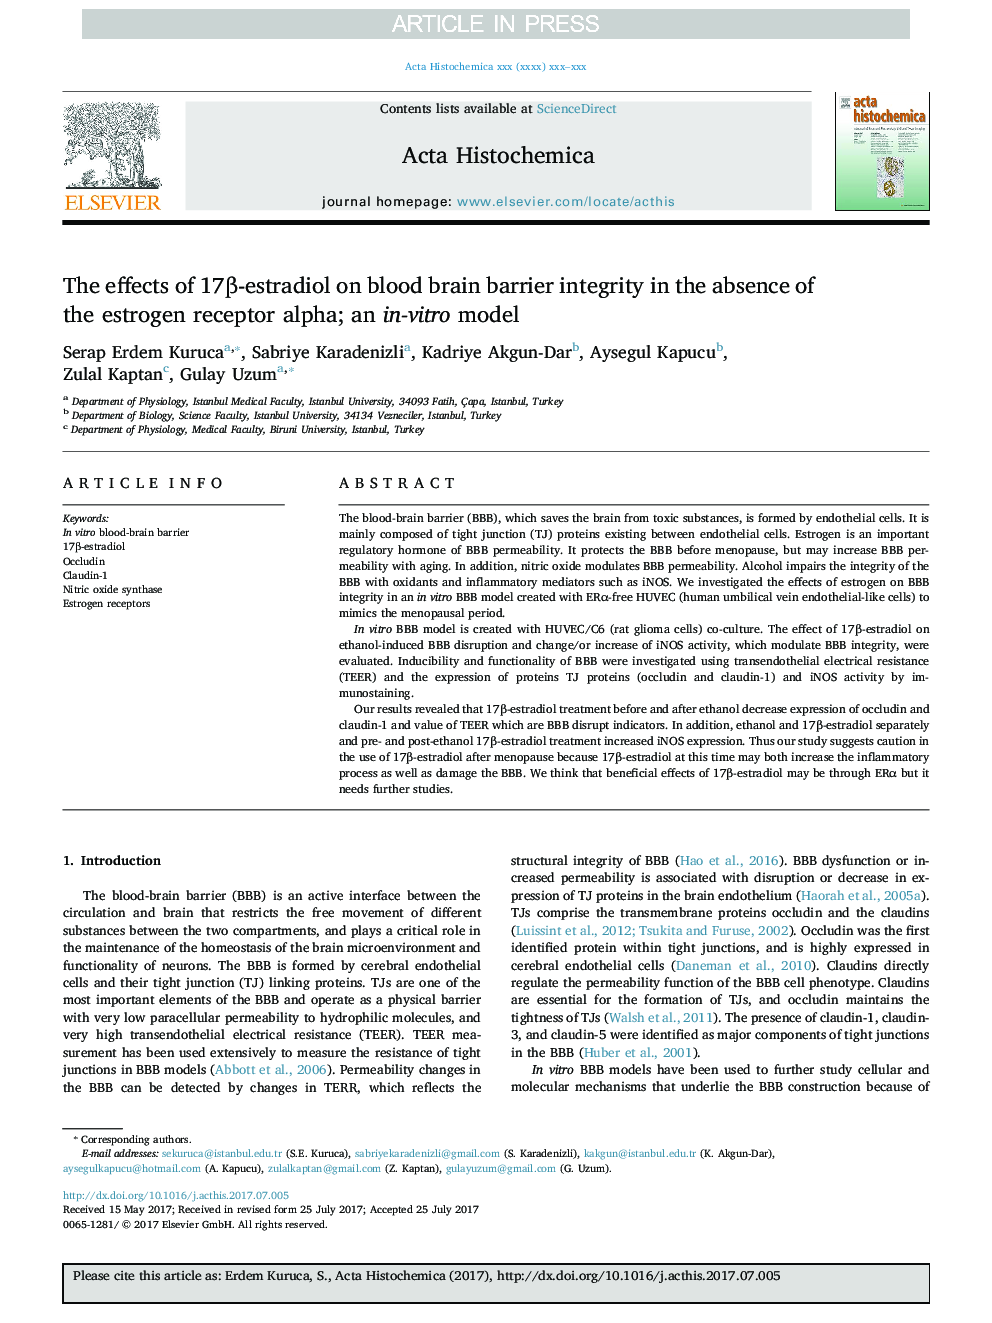 The effects of 17Î²-estradiol on blood brain barrier integrity in the absence of the estrogen receptor alpha; an in-vitro model